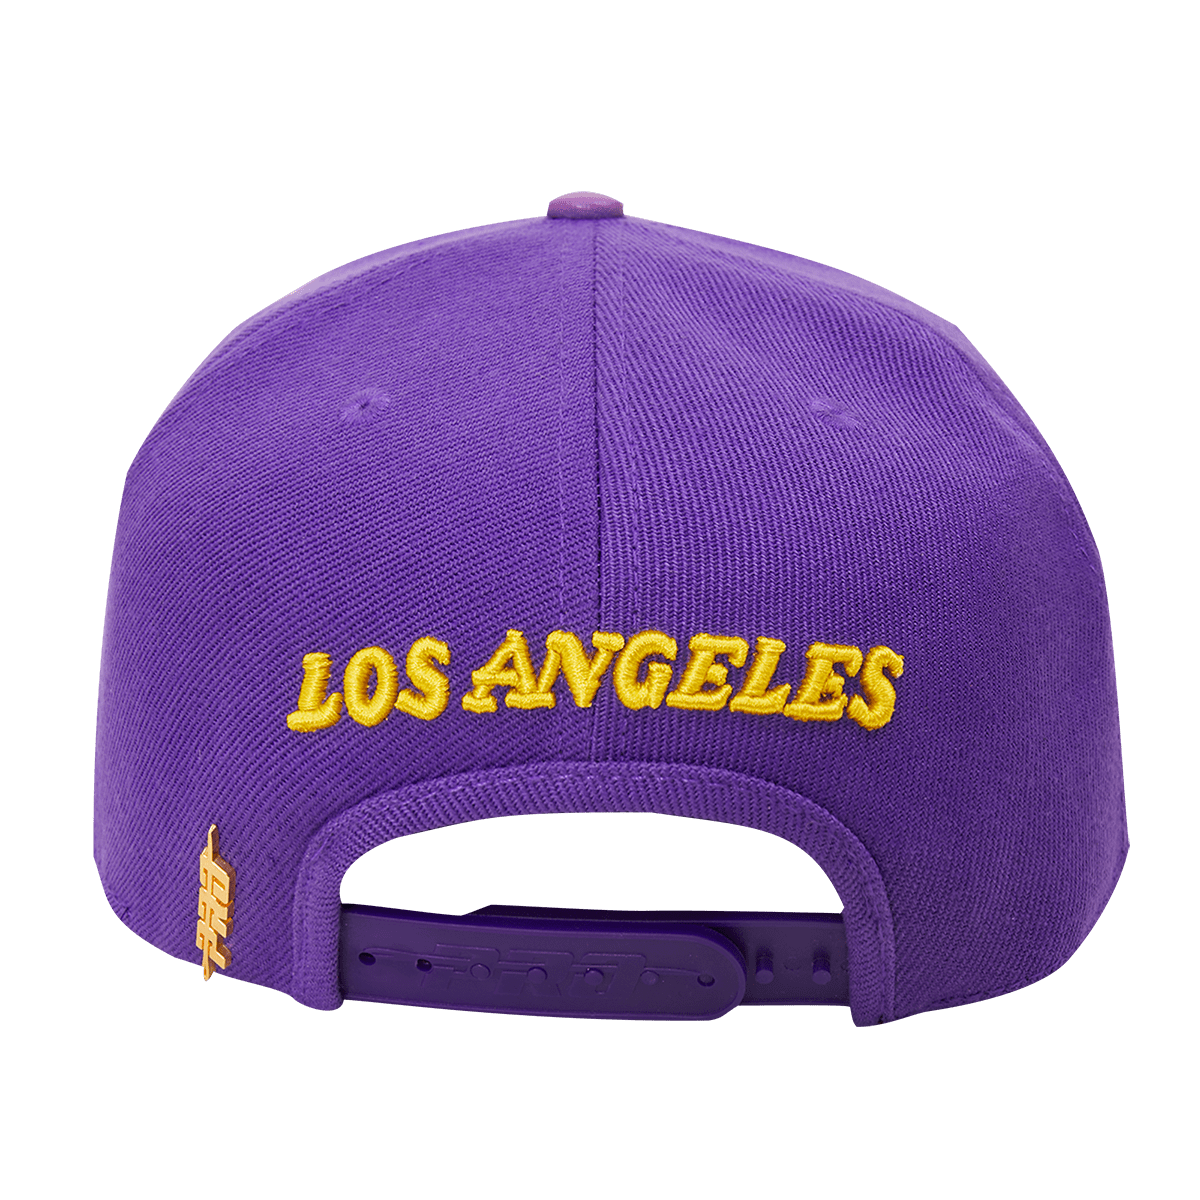 LOS ANGELES LAKERS WORDMARK AND LOGO SNAPBACK HAT (PURPLE)